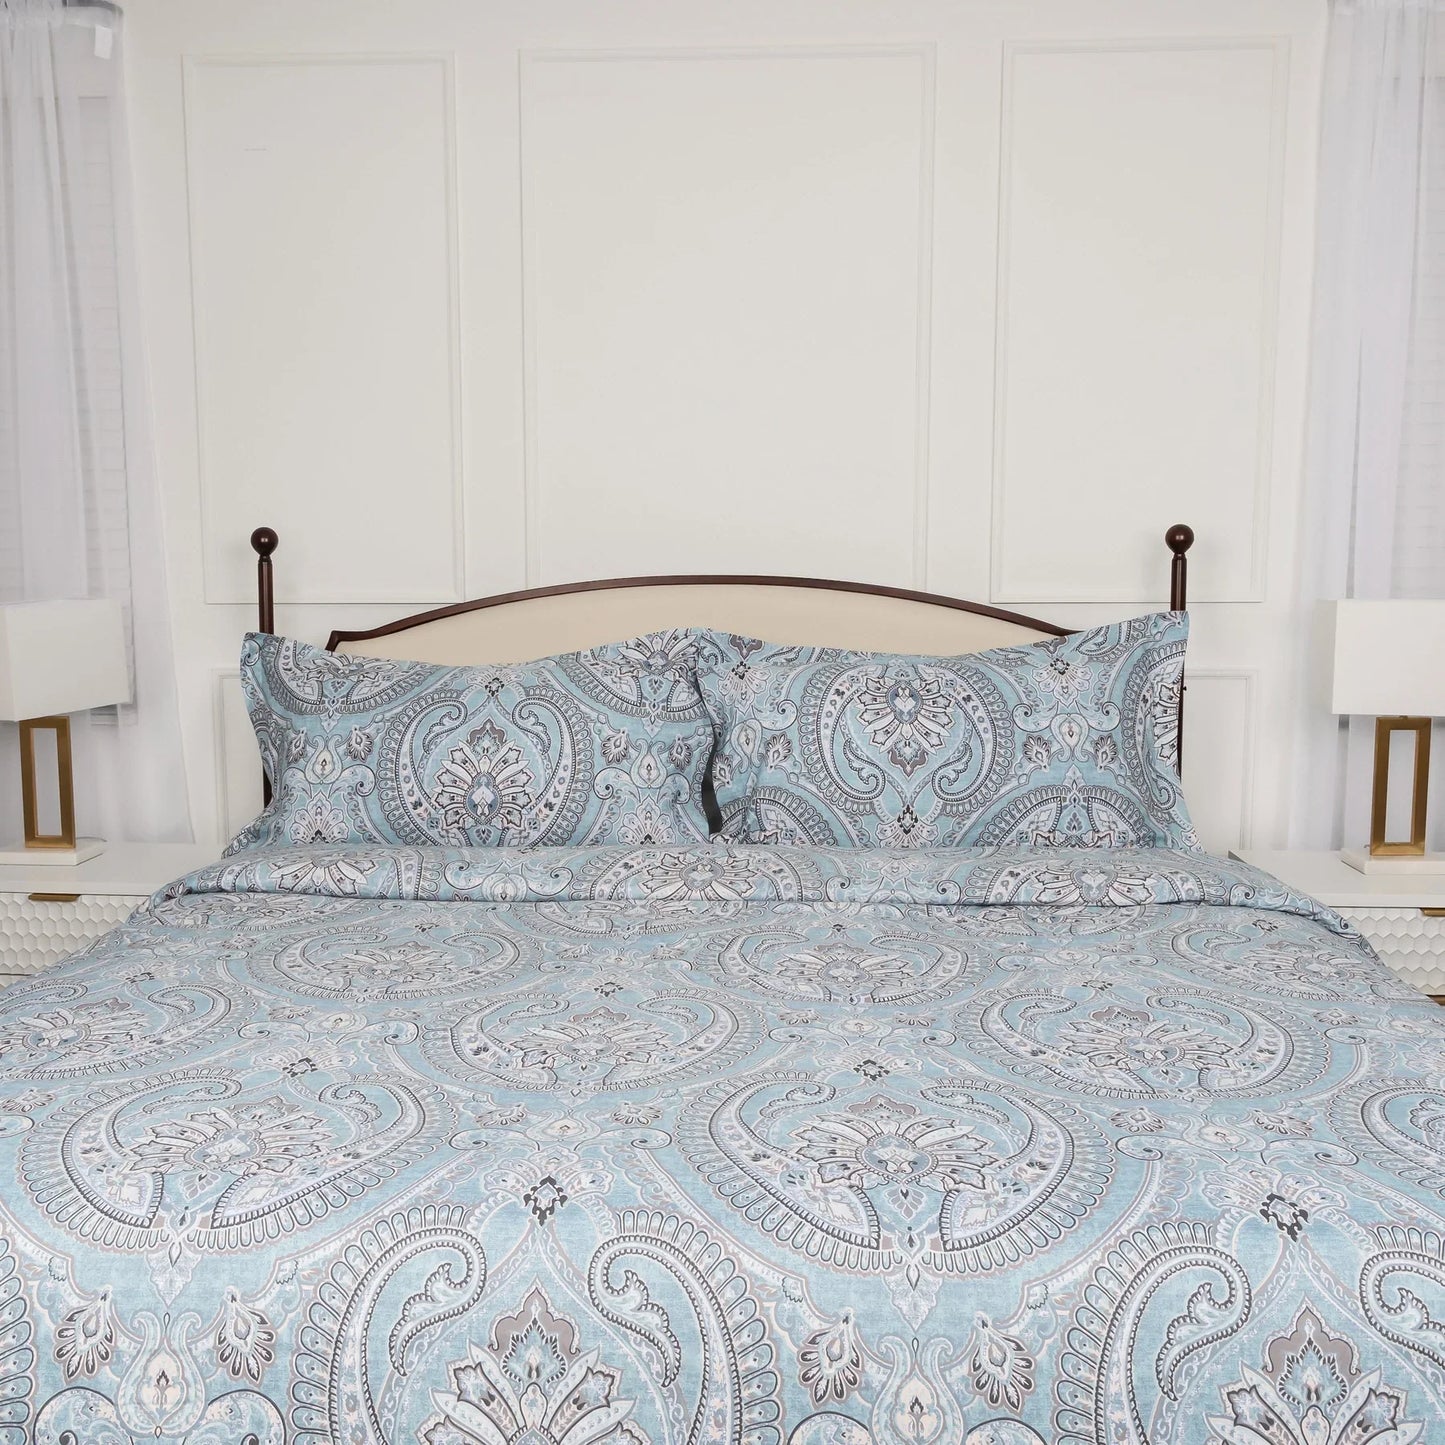 Royal Paisley Comforter Set, Aqua